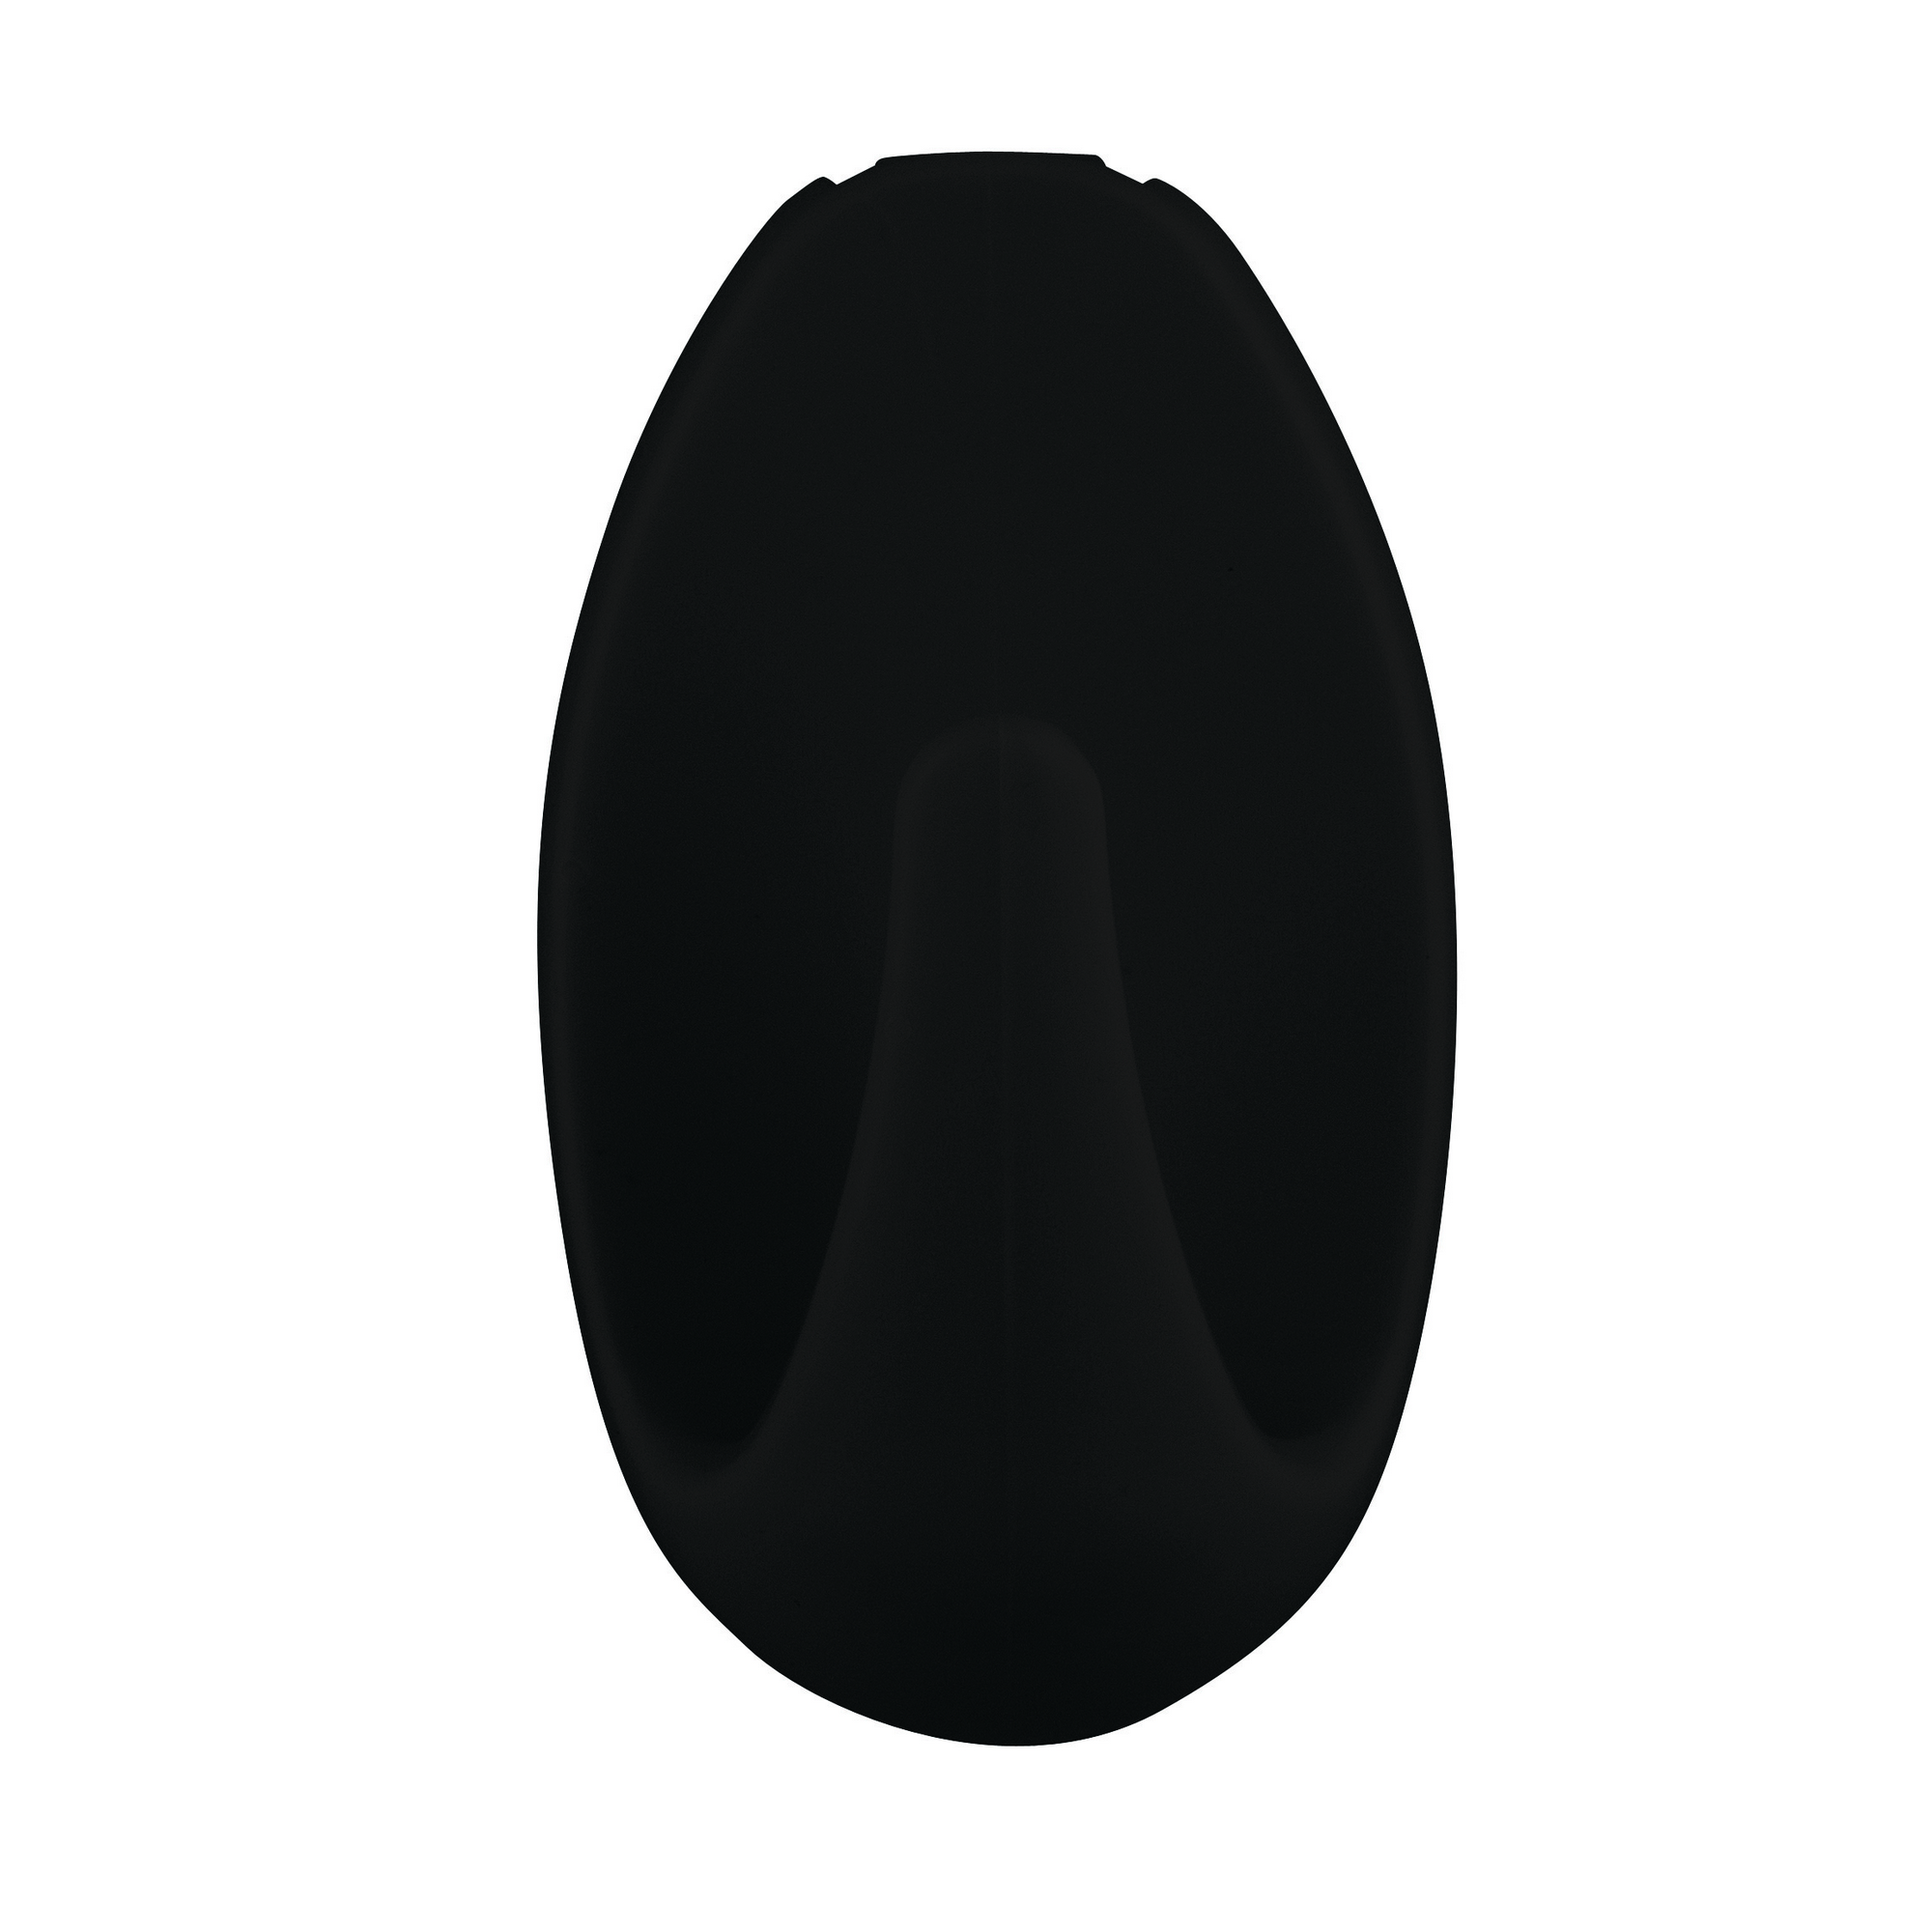 Haken 'Powerstrips' schwarz oval selbstklebend + product picture